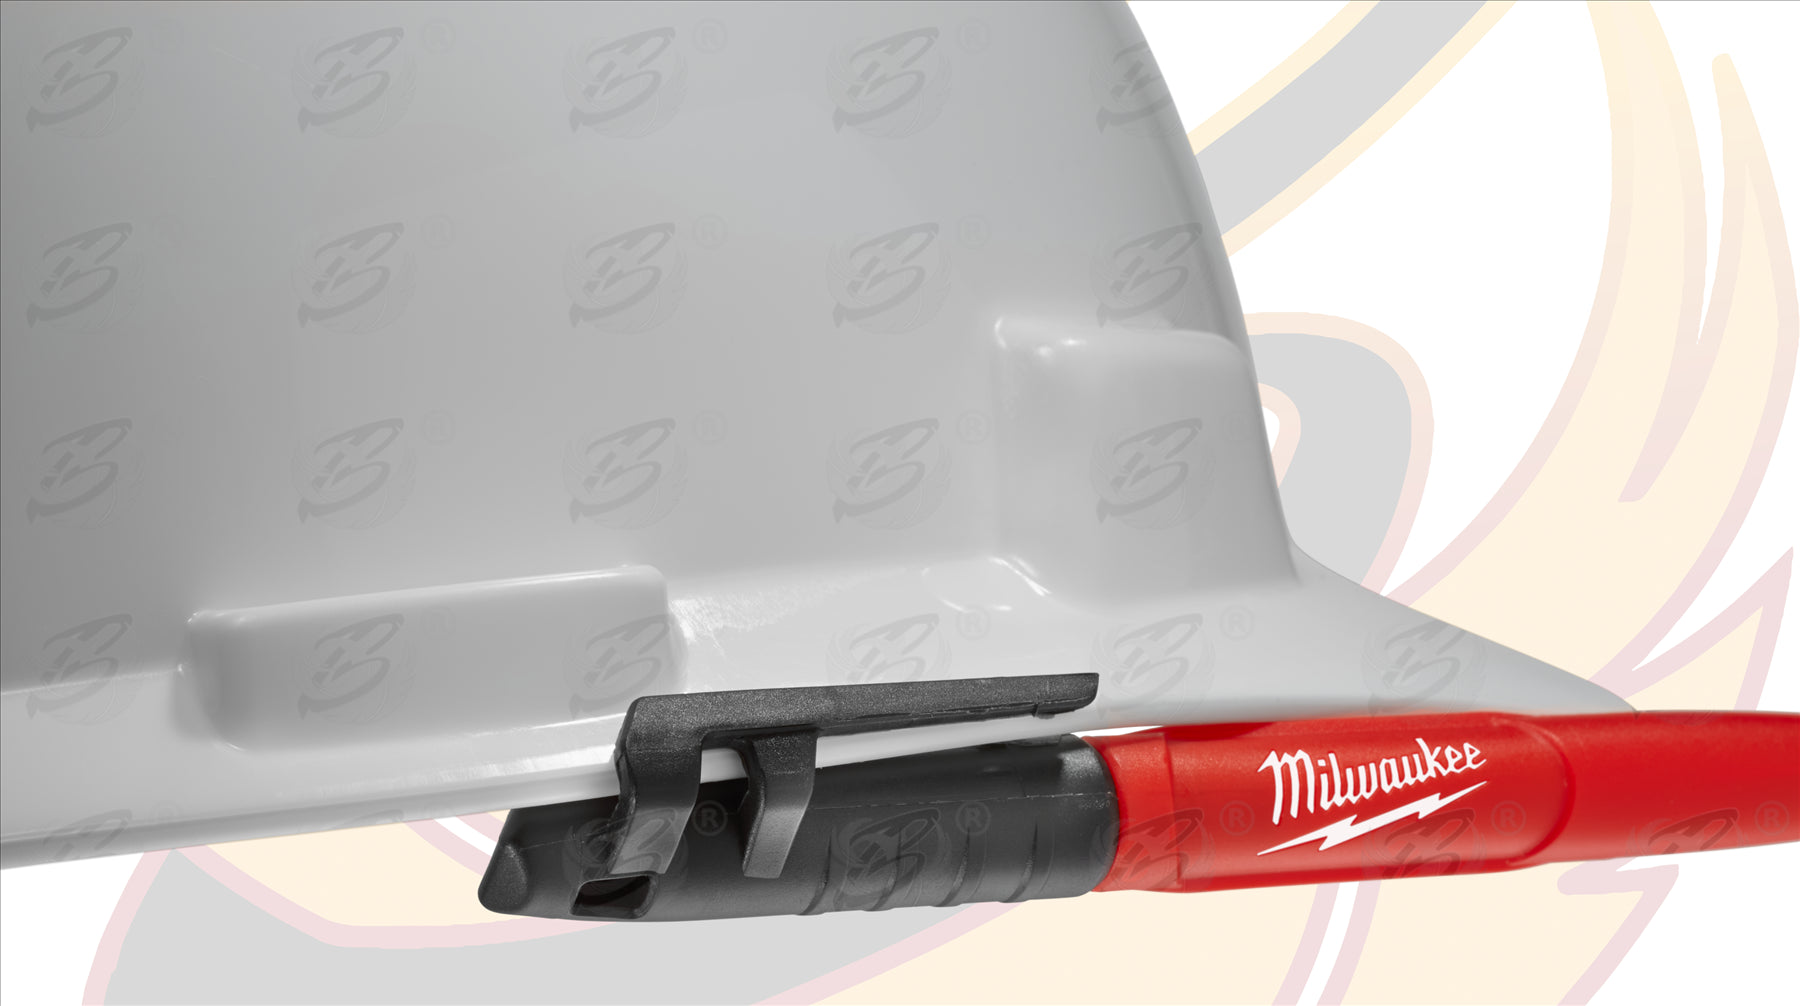 MILWAUKEE INKZALL 1mm ALL SURFACE MARKER PEN ( x2 )